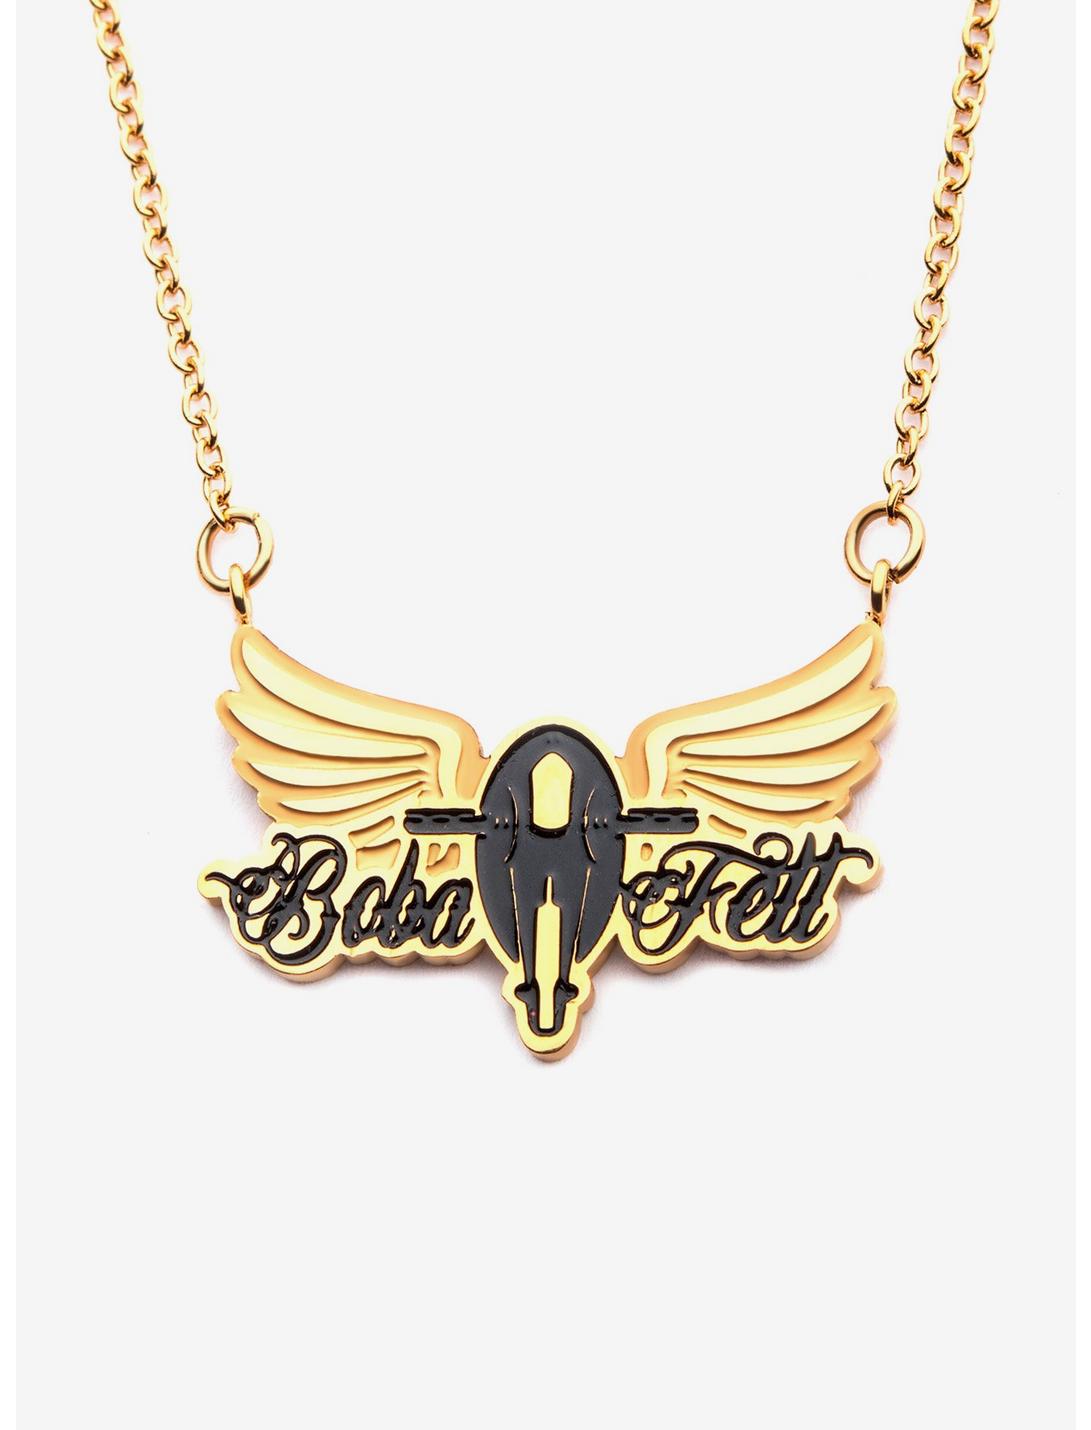 Star Wars Boba Fett Rock Pendant Necklace, , hi-res